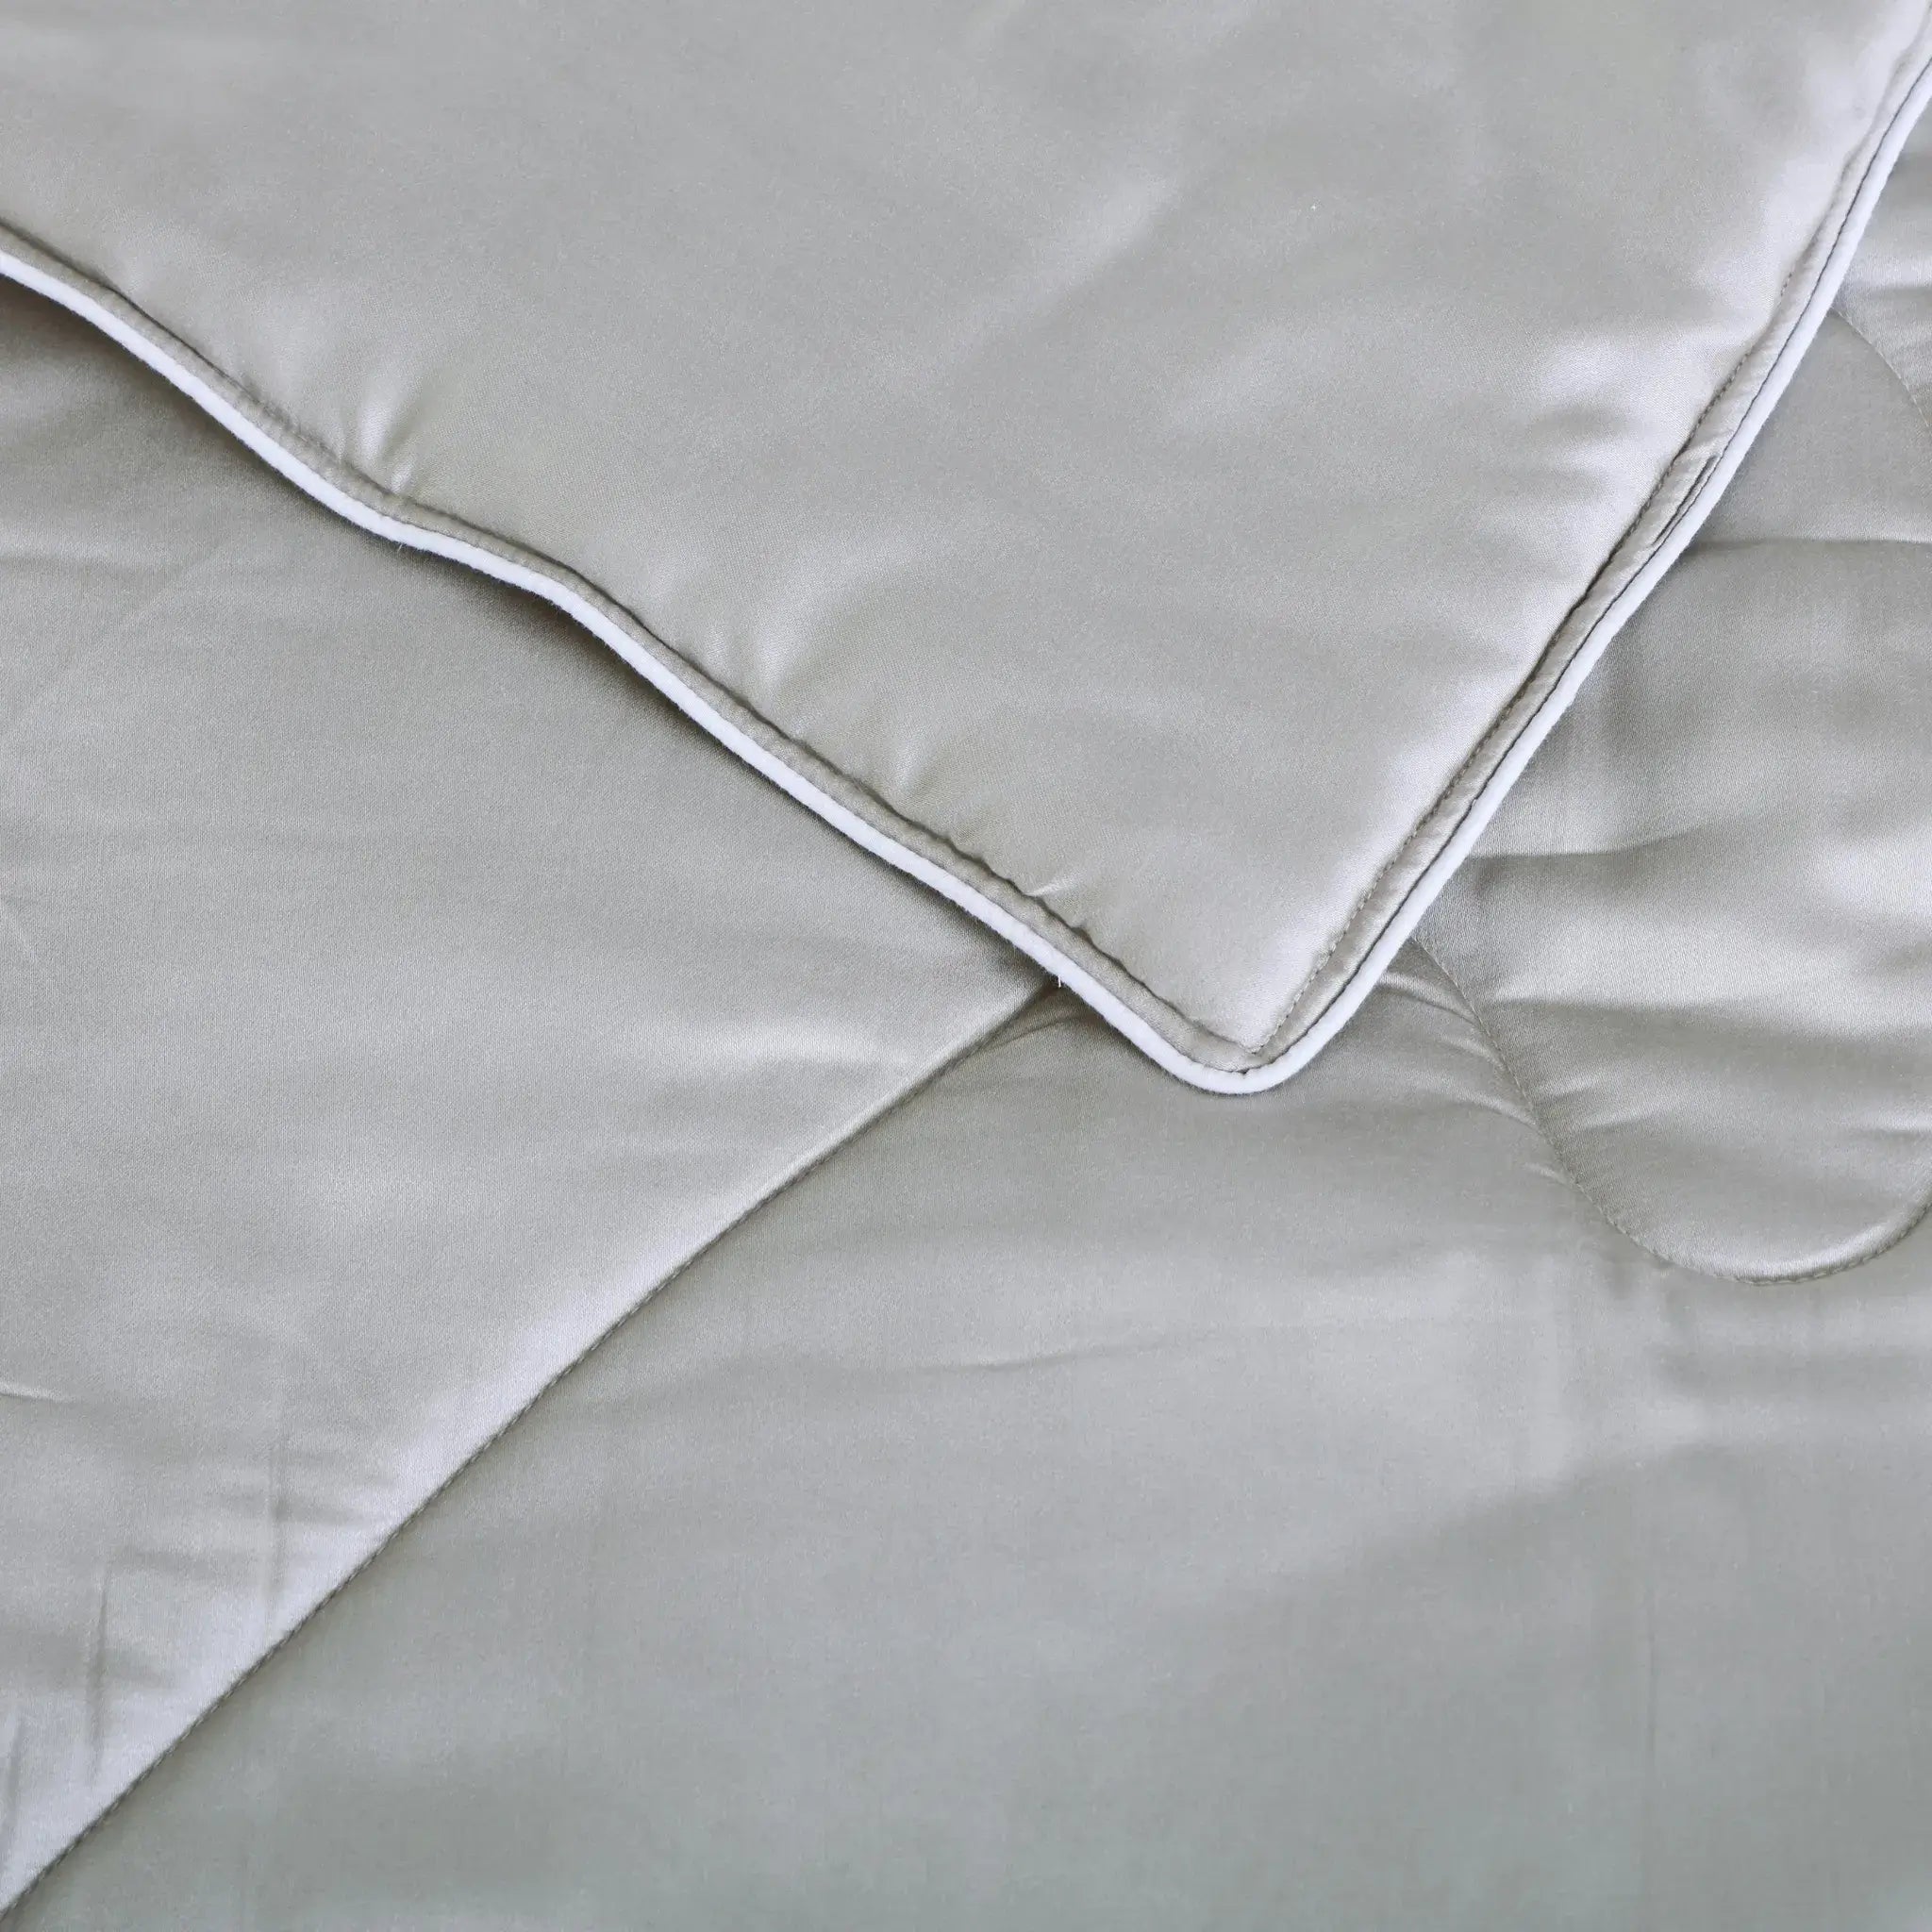 Malako Summer Soft Gel Silver Grey 100% Bamboo Quilt/Comforter (200GSM) - MALAKO